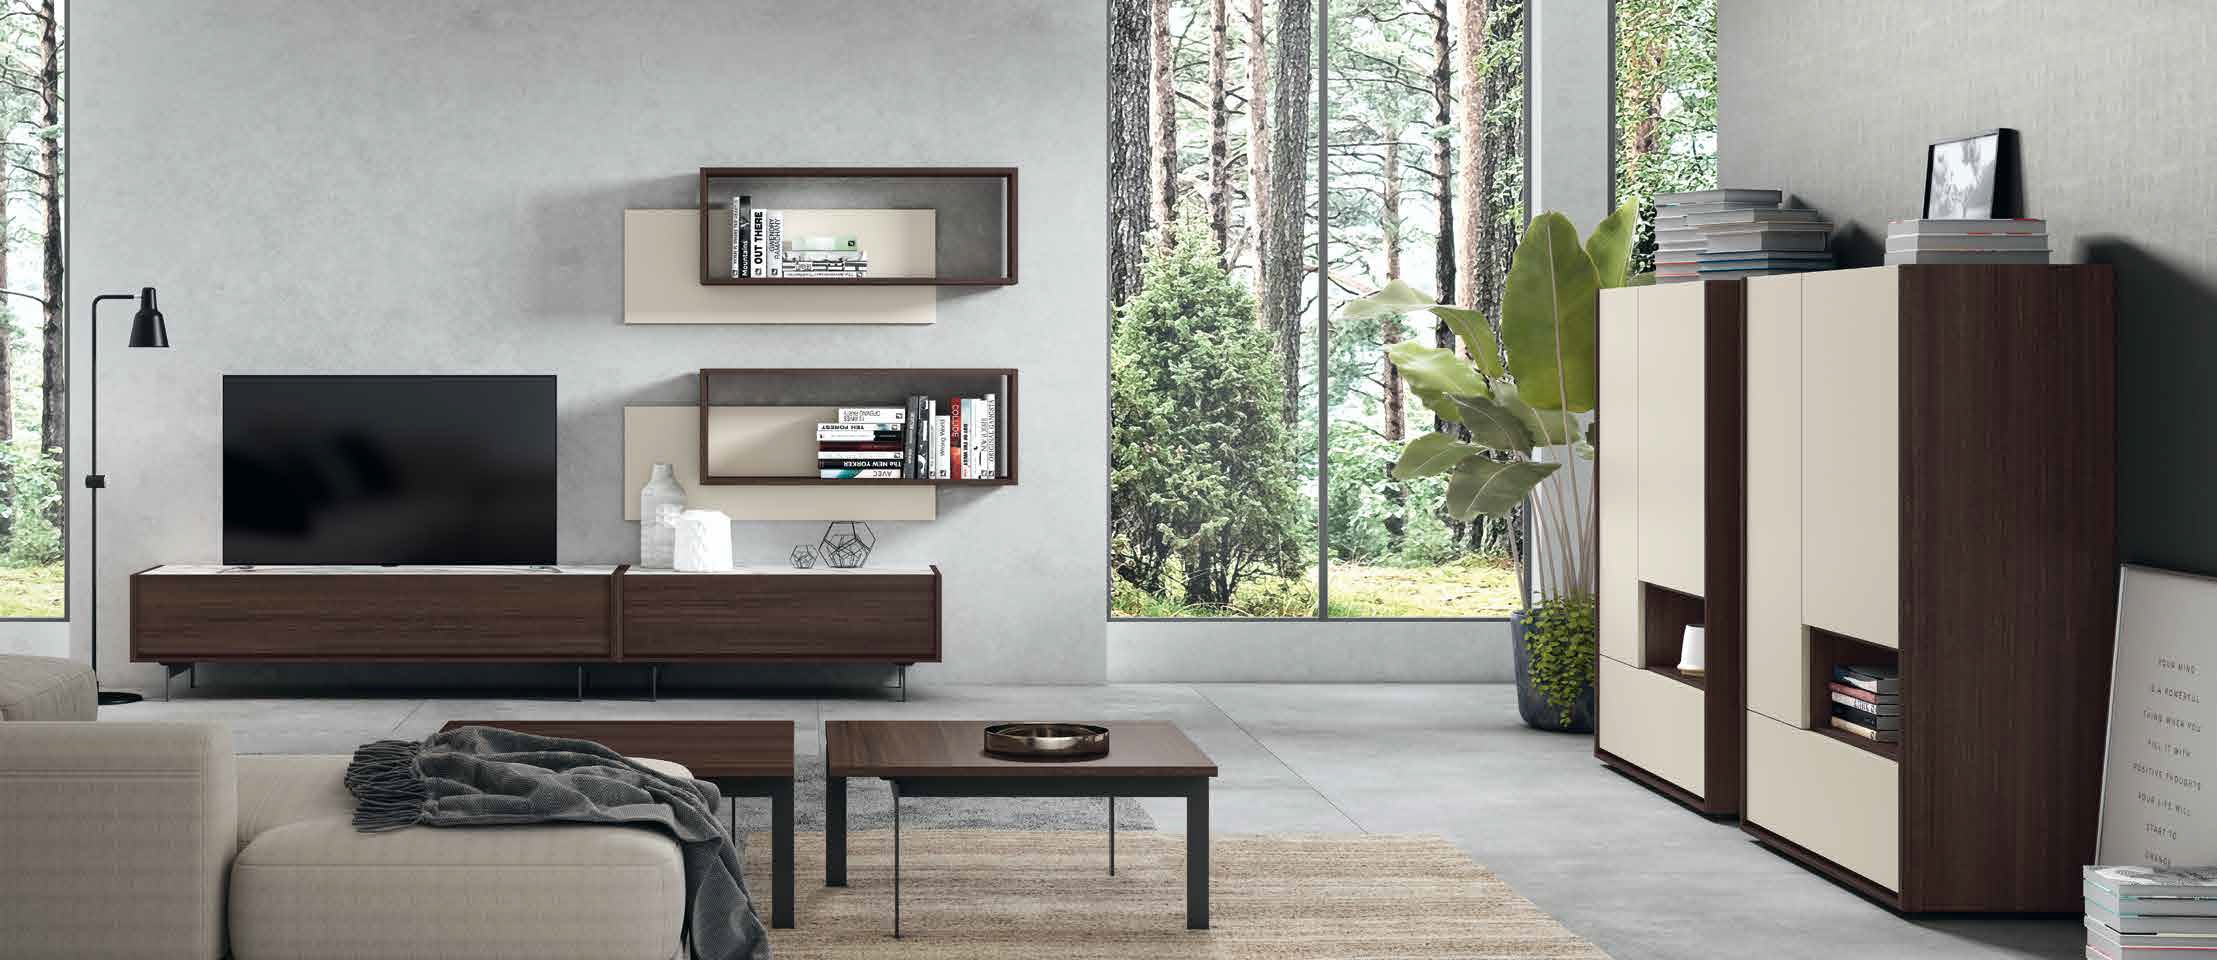 salon-moderno-Nativ-2019-muebles-paco-caballero-0920-5c8cea99dcb4a